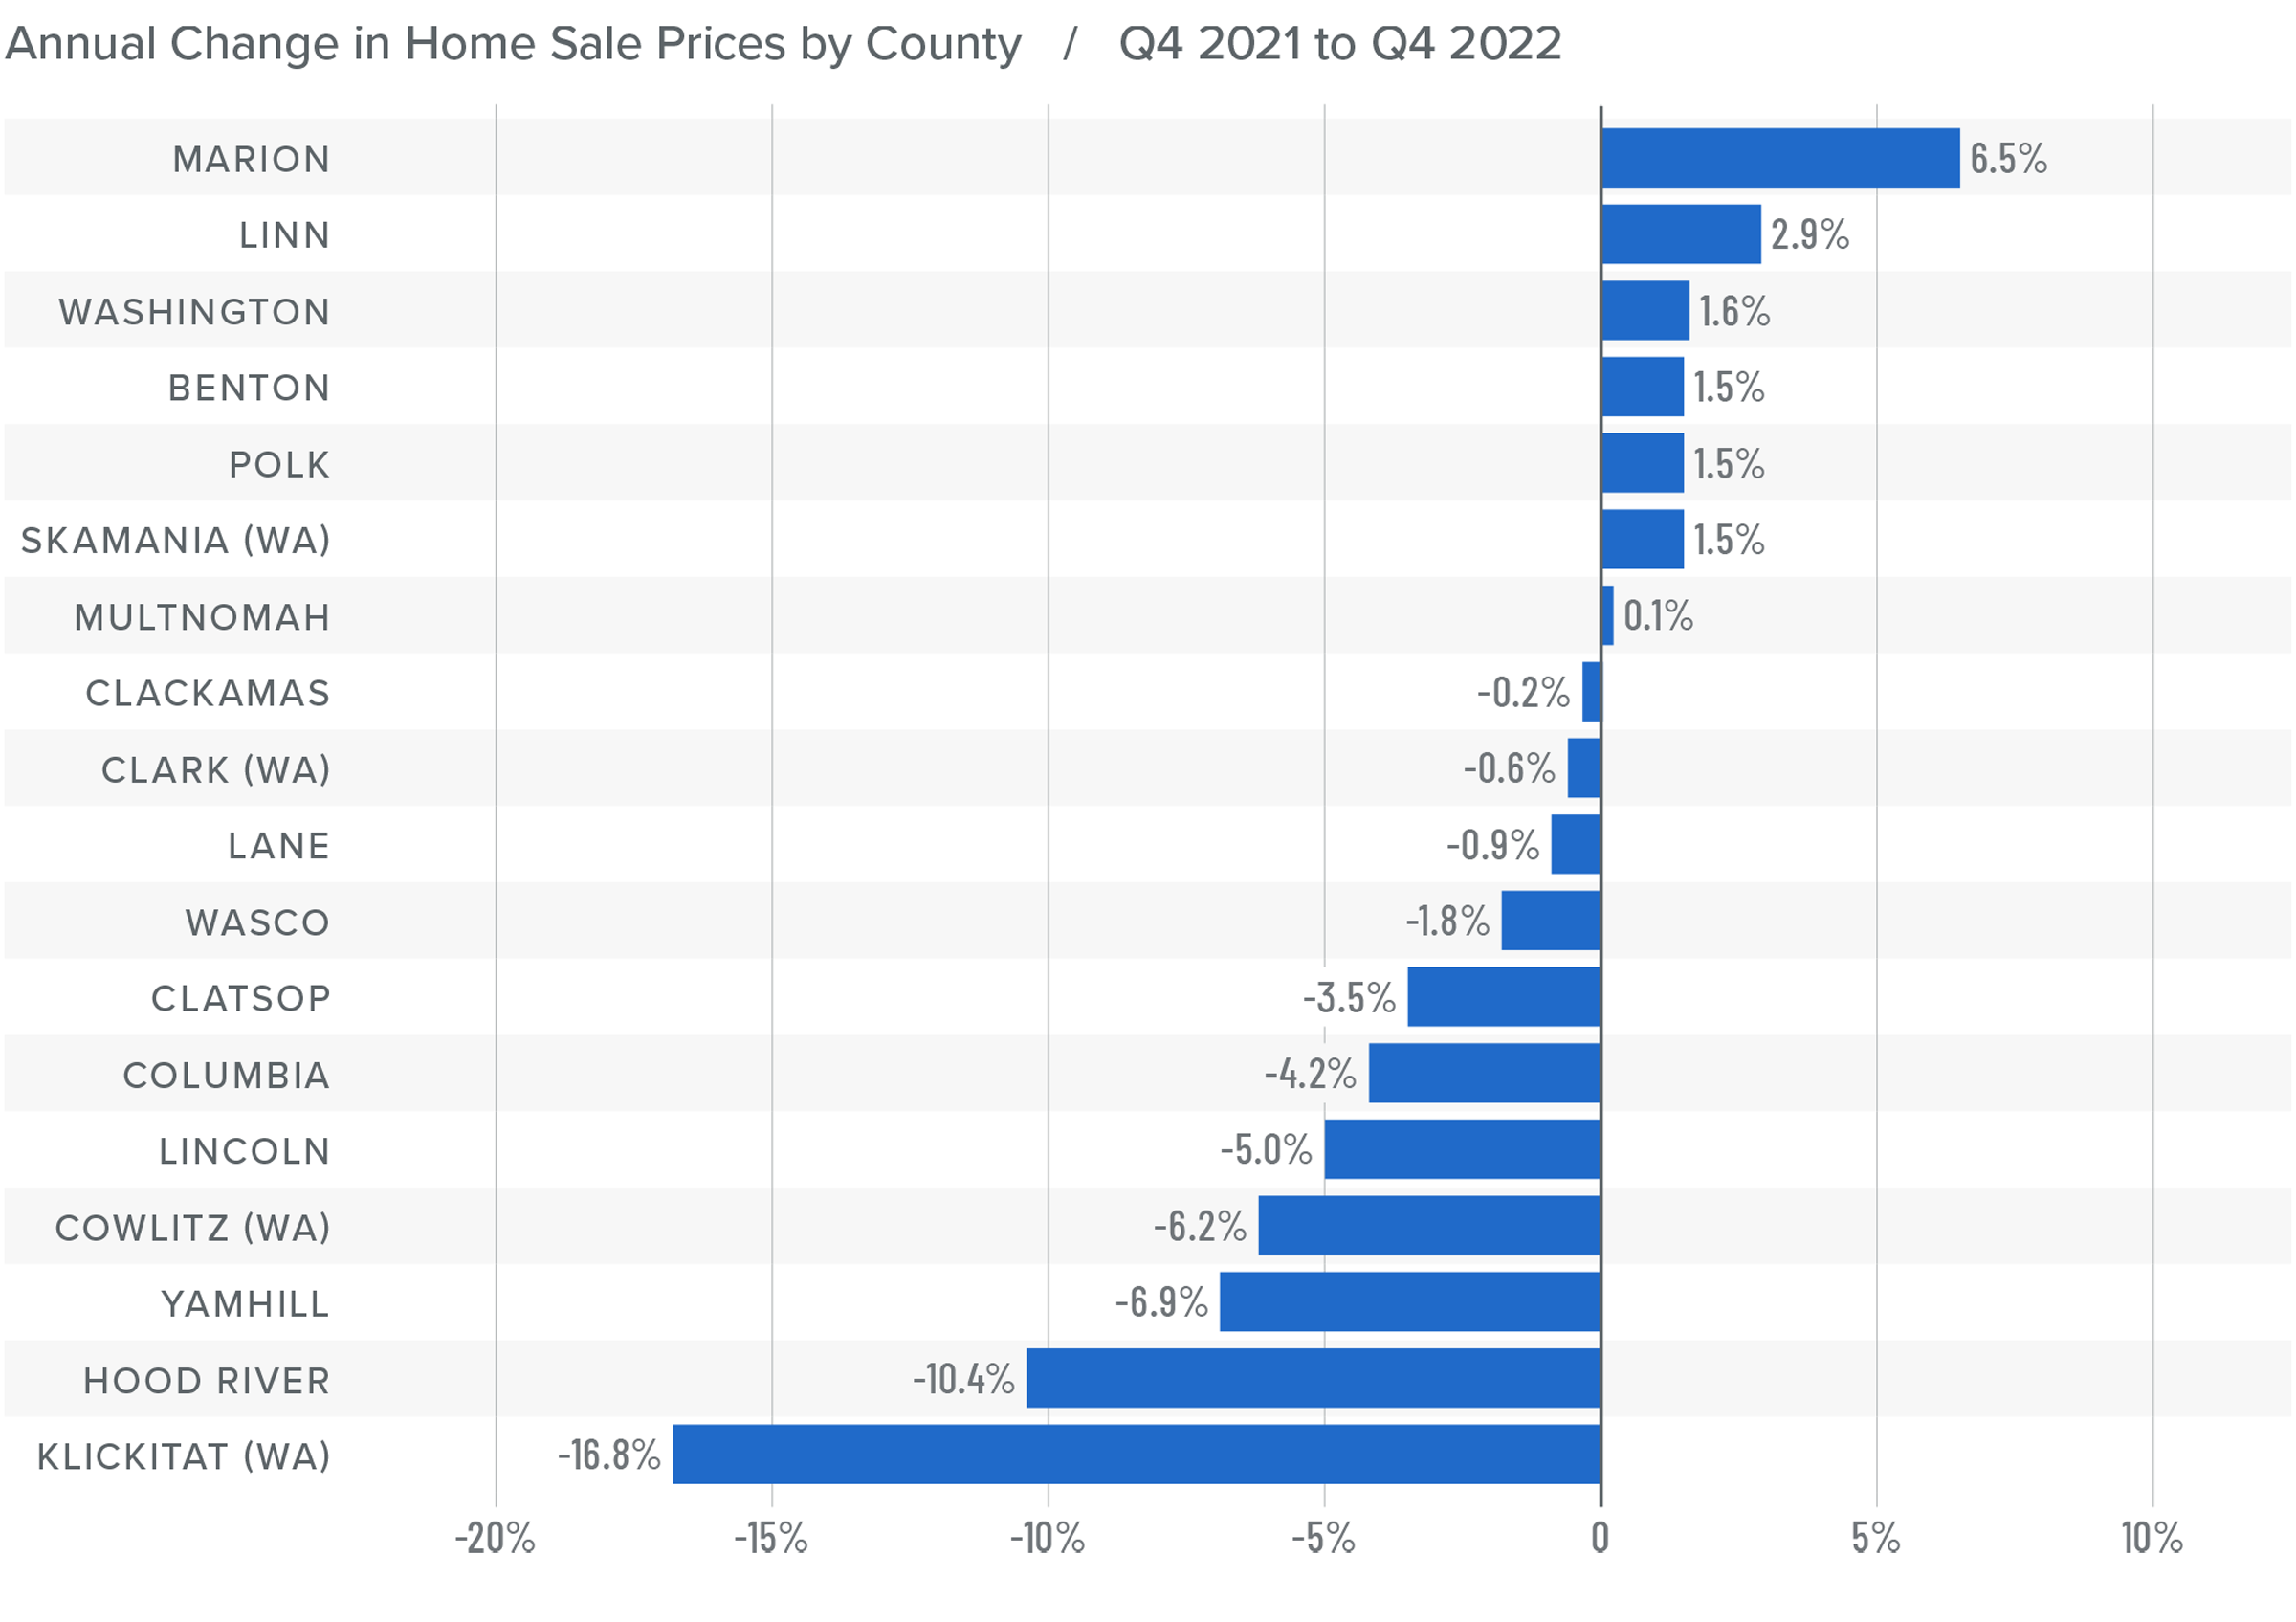 A bar graph showing the annual change in home sale prices for various counties in Northwest Oregon and Southwest Washington from Q4 2021 to Q4 2022. Marion County tops the list at 6.5%, followed by Linn at 2.9%, Washington at 1.6%, Benton, Polk, and Skamania at 1.5%, Multnomah at 0.1%, Clackamas at -0.2%, Clark at -0.6%, Lane at -0.9%, Wasco at -1.8%, Clatsop at -3.5%, Columbia at -4.2%, Lincoln at -5%, Cowlitz at -6.2%, Yamhill at -6.9%, Hood River at -10.4%, and finally Klickitat at -16.8%.